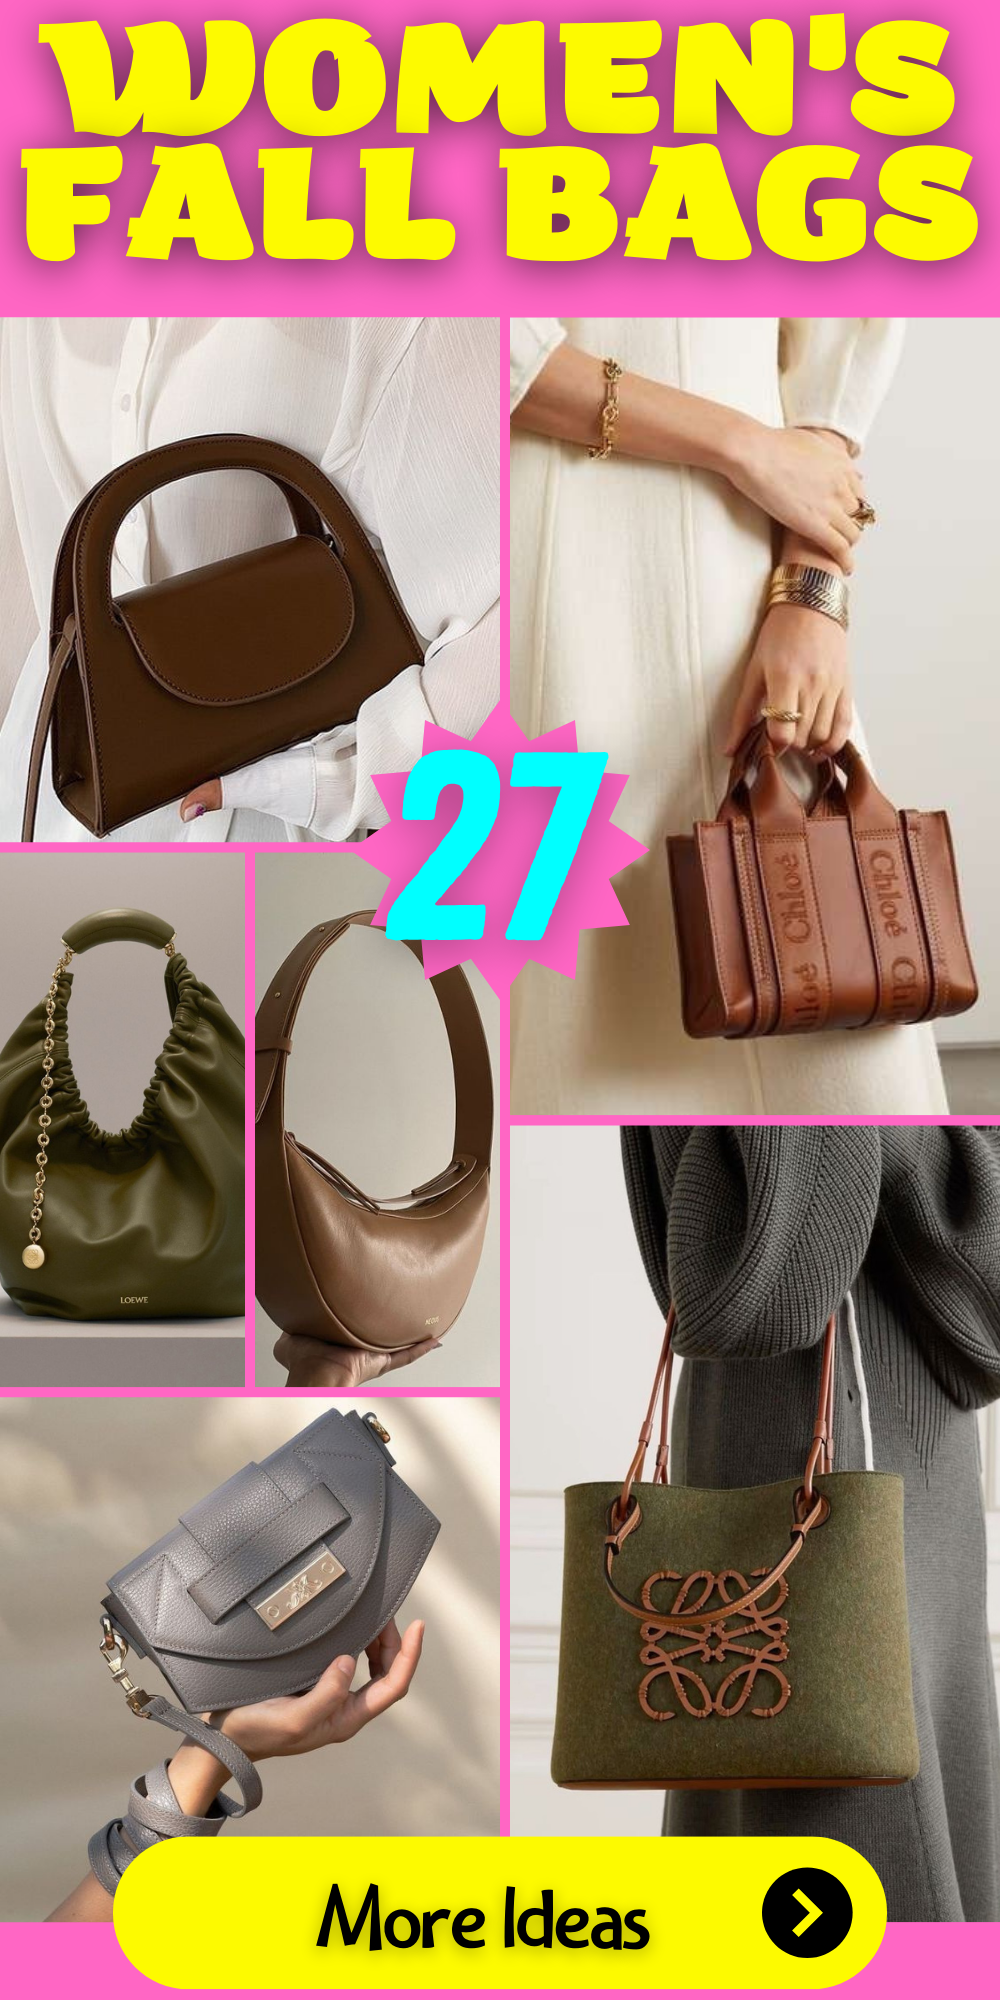 27 Stylish Women's Fall Bag Ideas